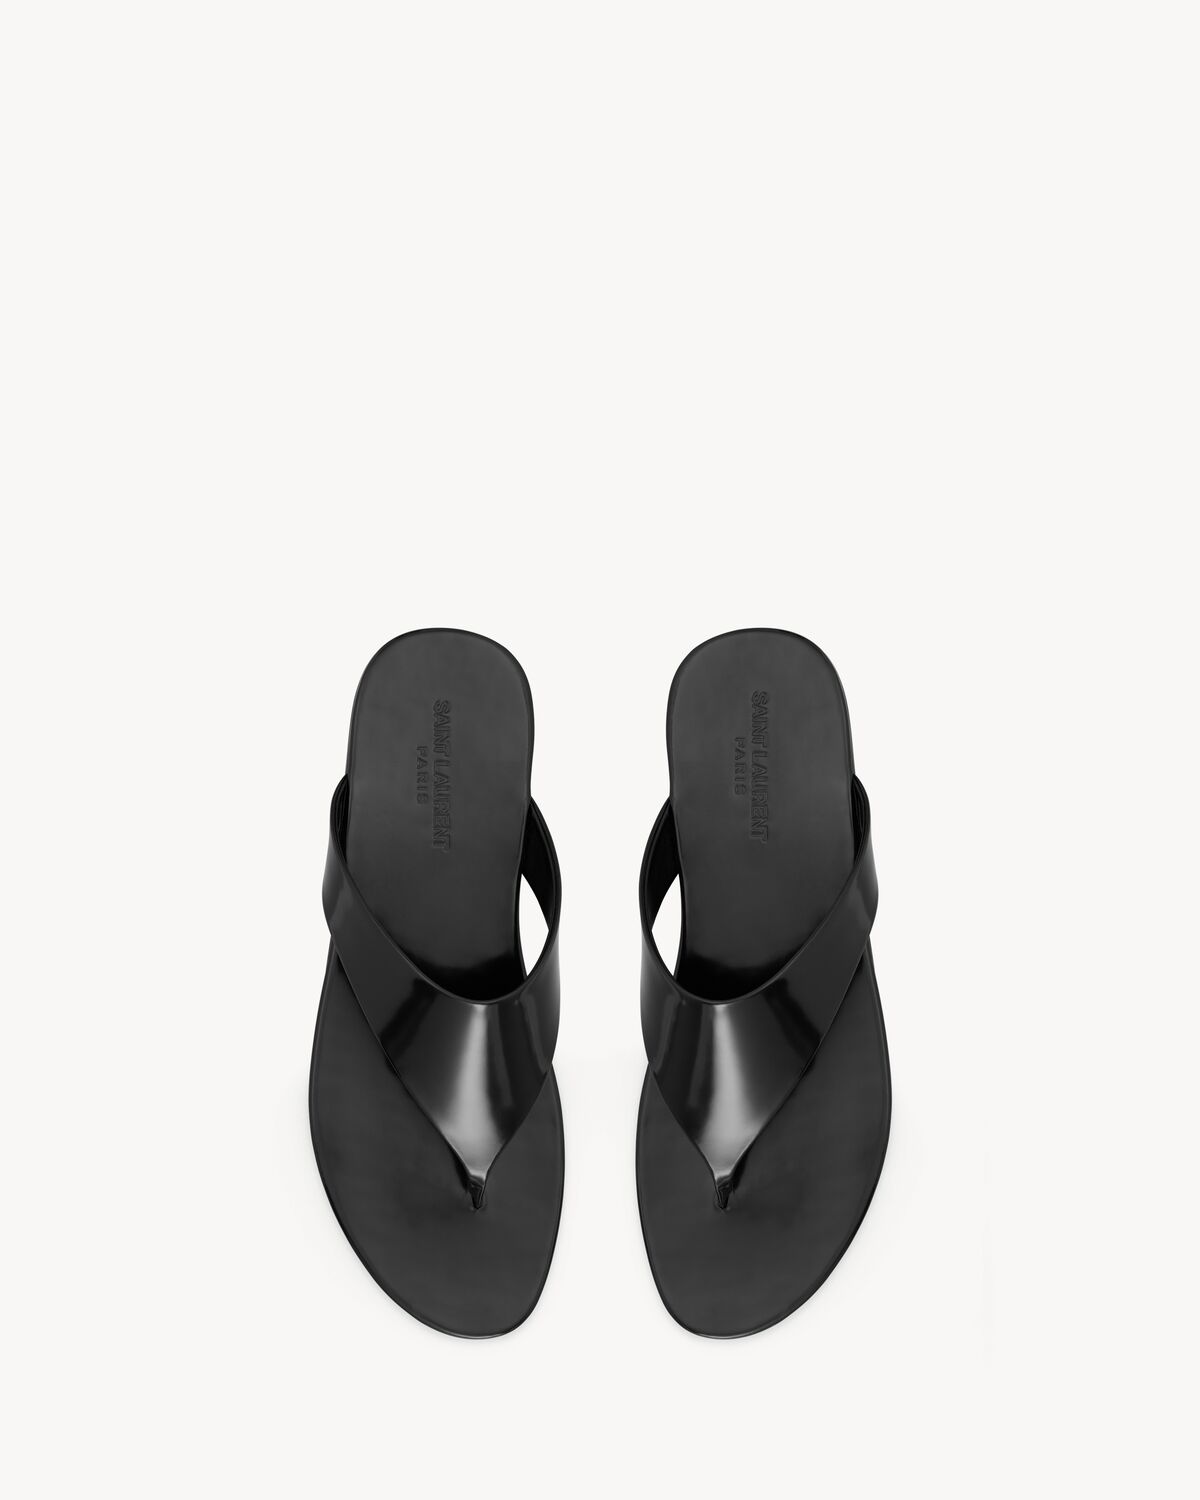 KOUROS sandals in glazed leather